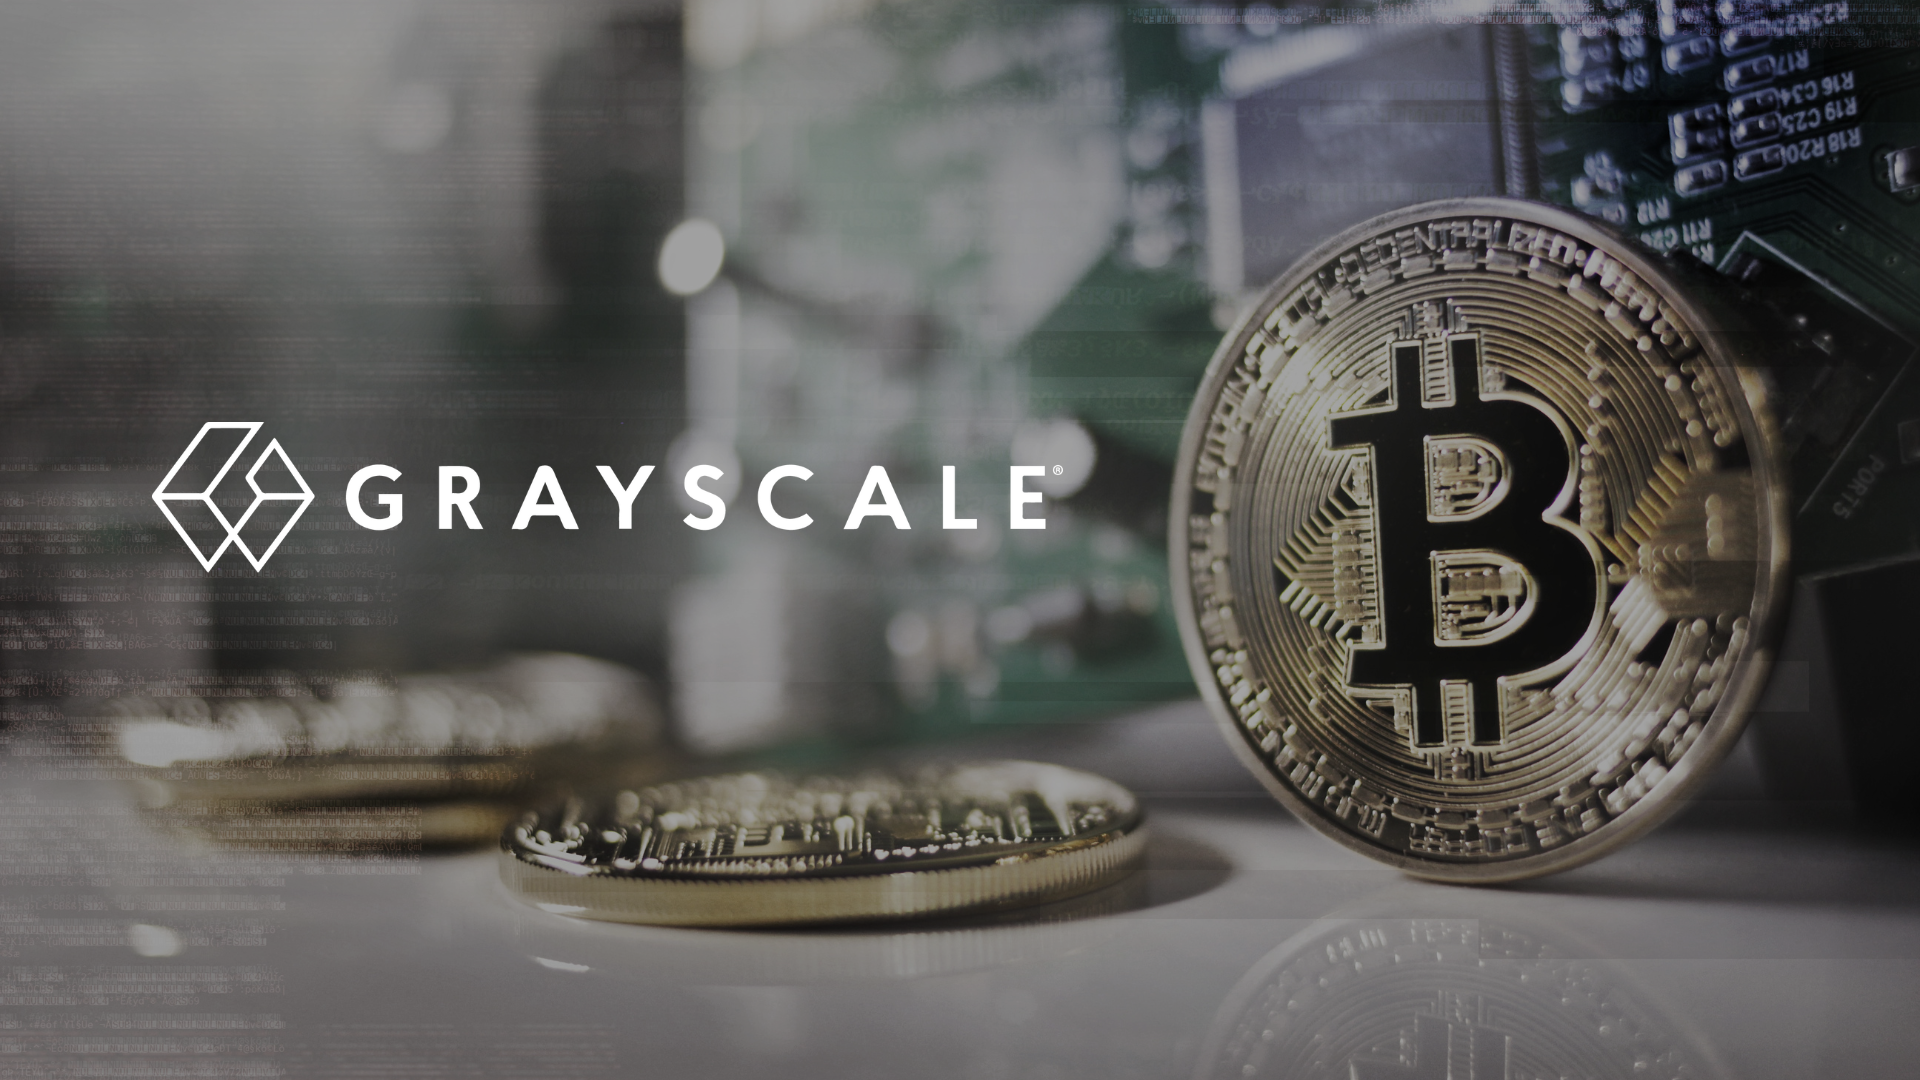 Grayscale Bitcoin Trust (BTC) (GBTC) Stock Price, News, Quote & History - Yahoo Finance